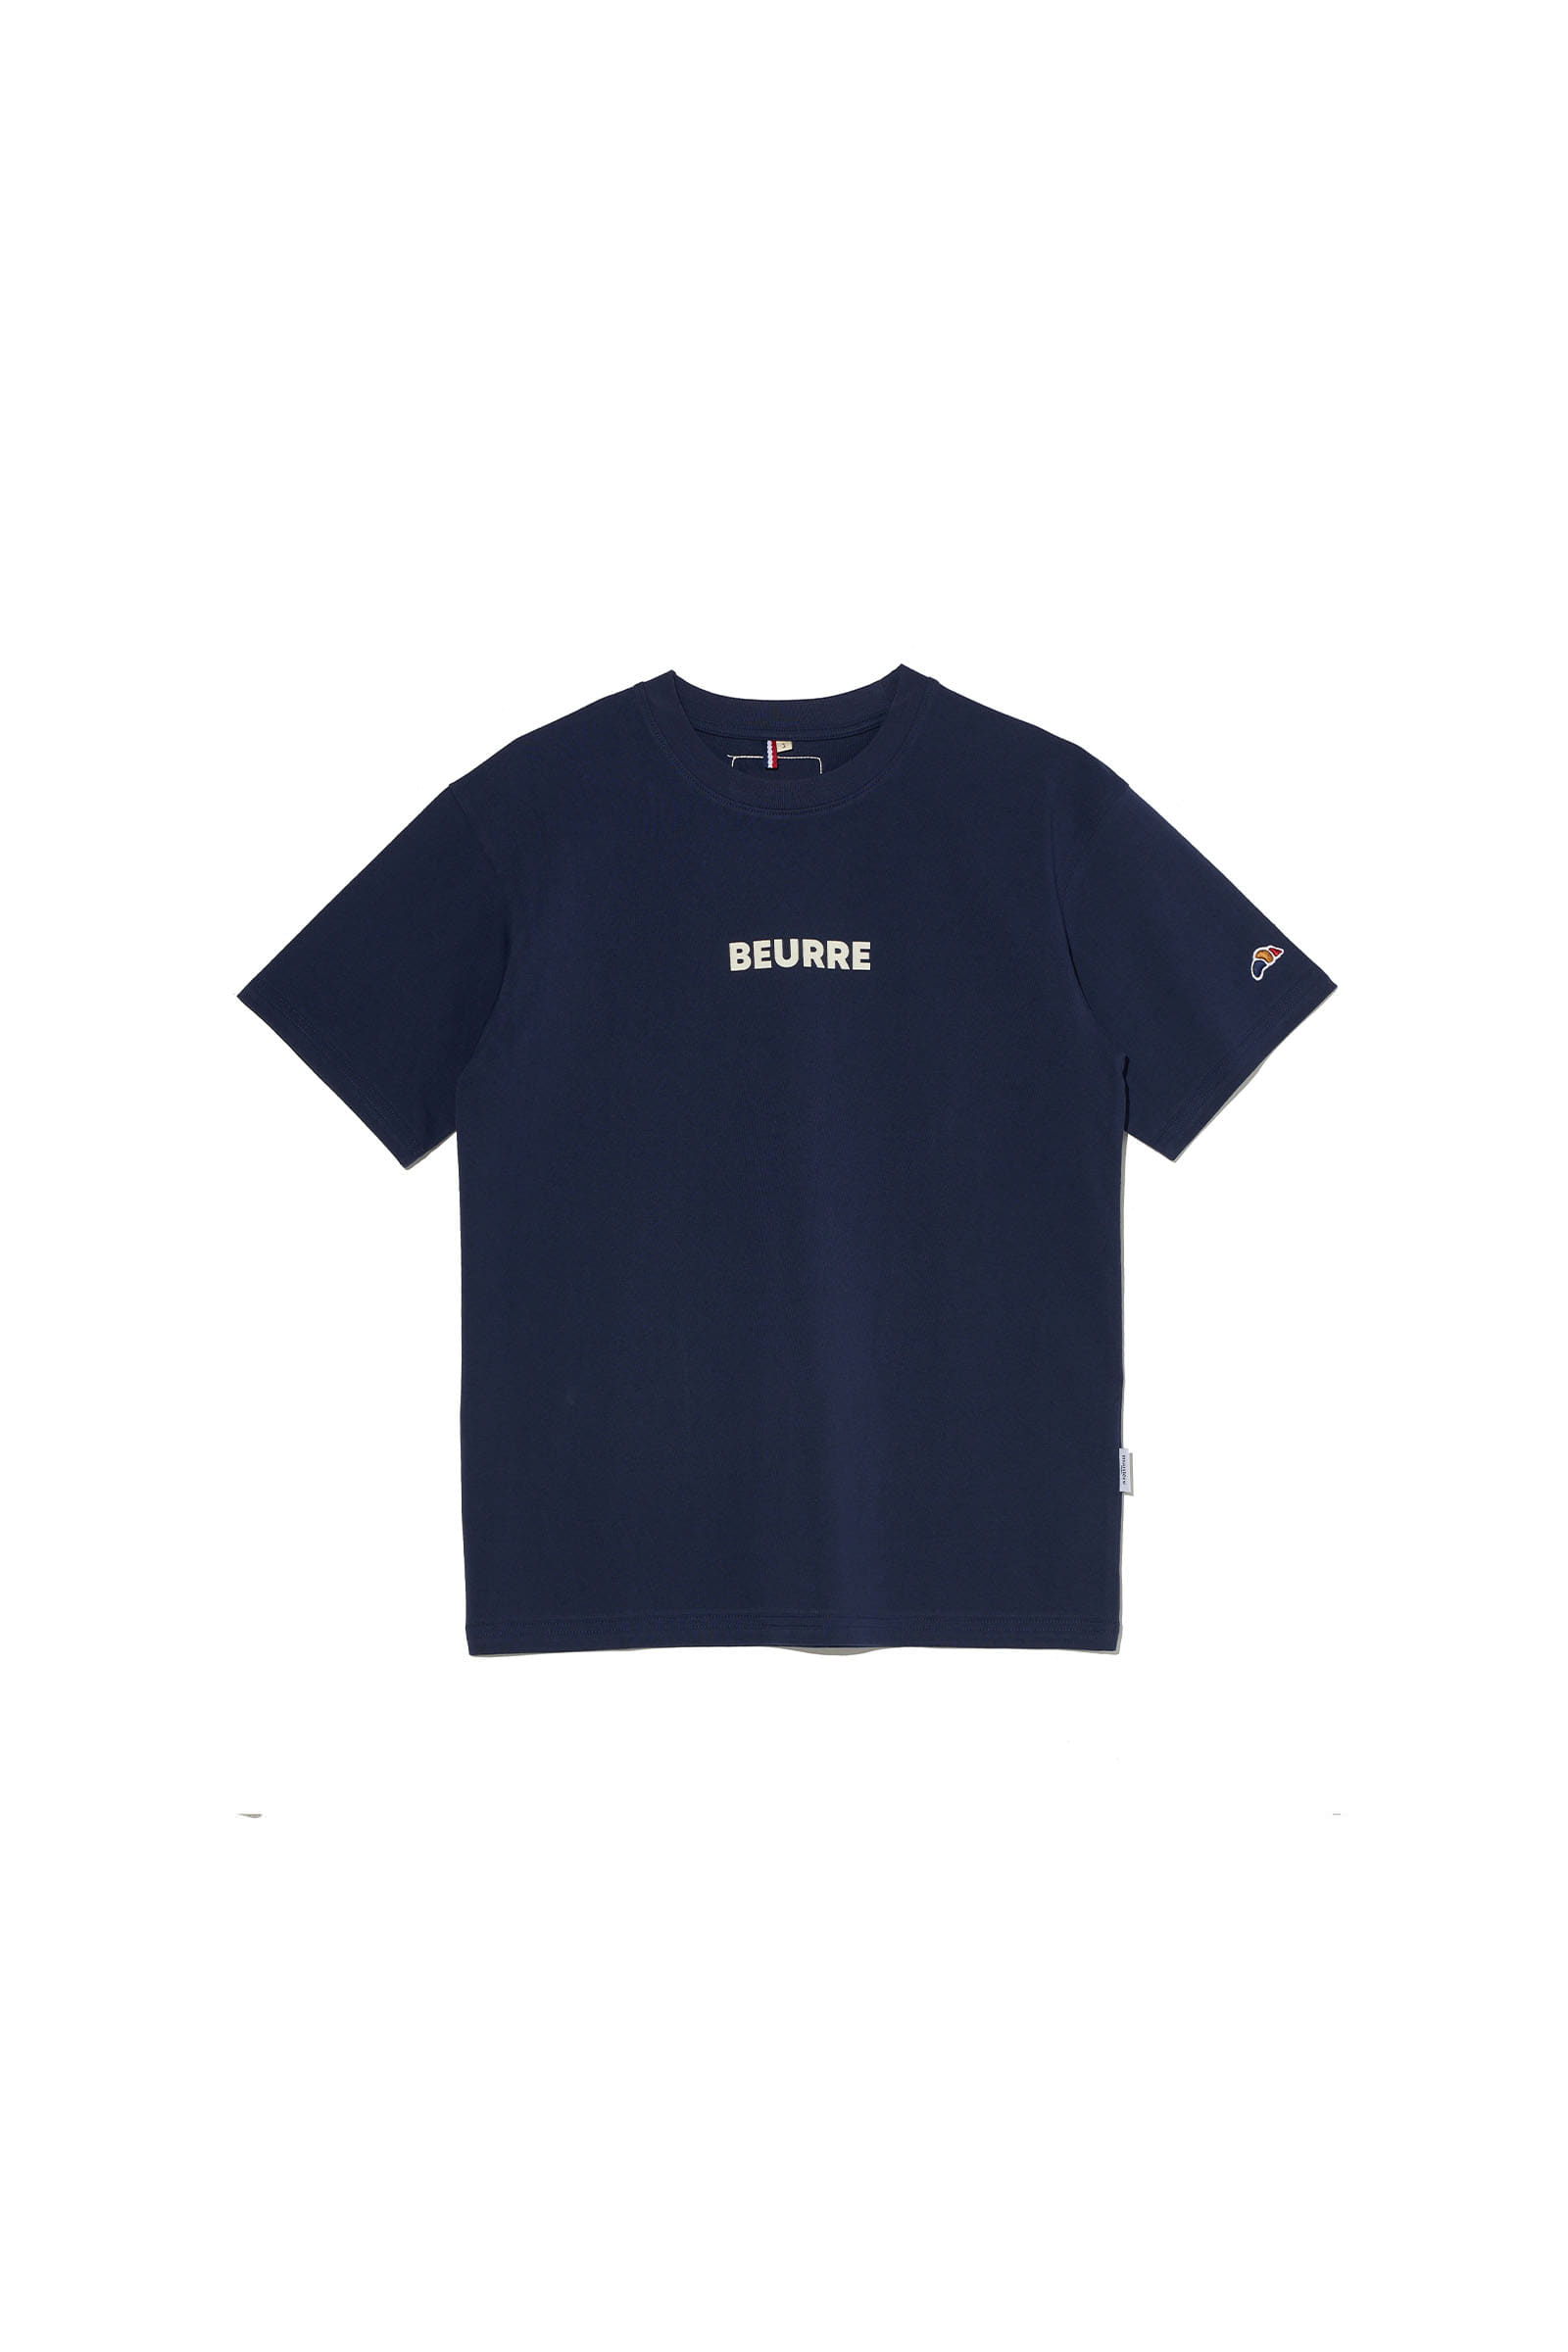 ep.6 BEURRE Mini T-shirts (Navy)